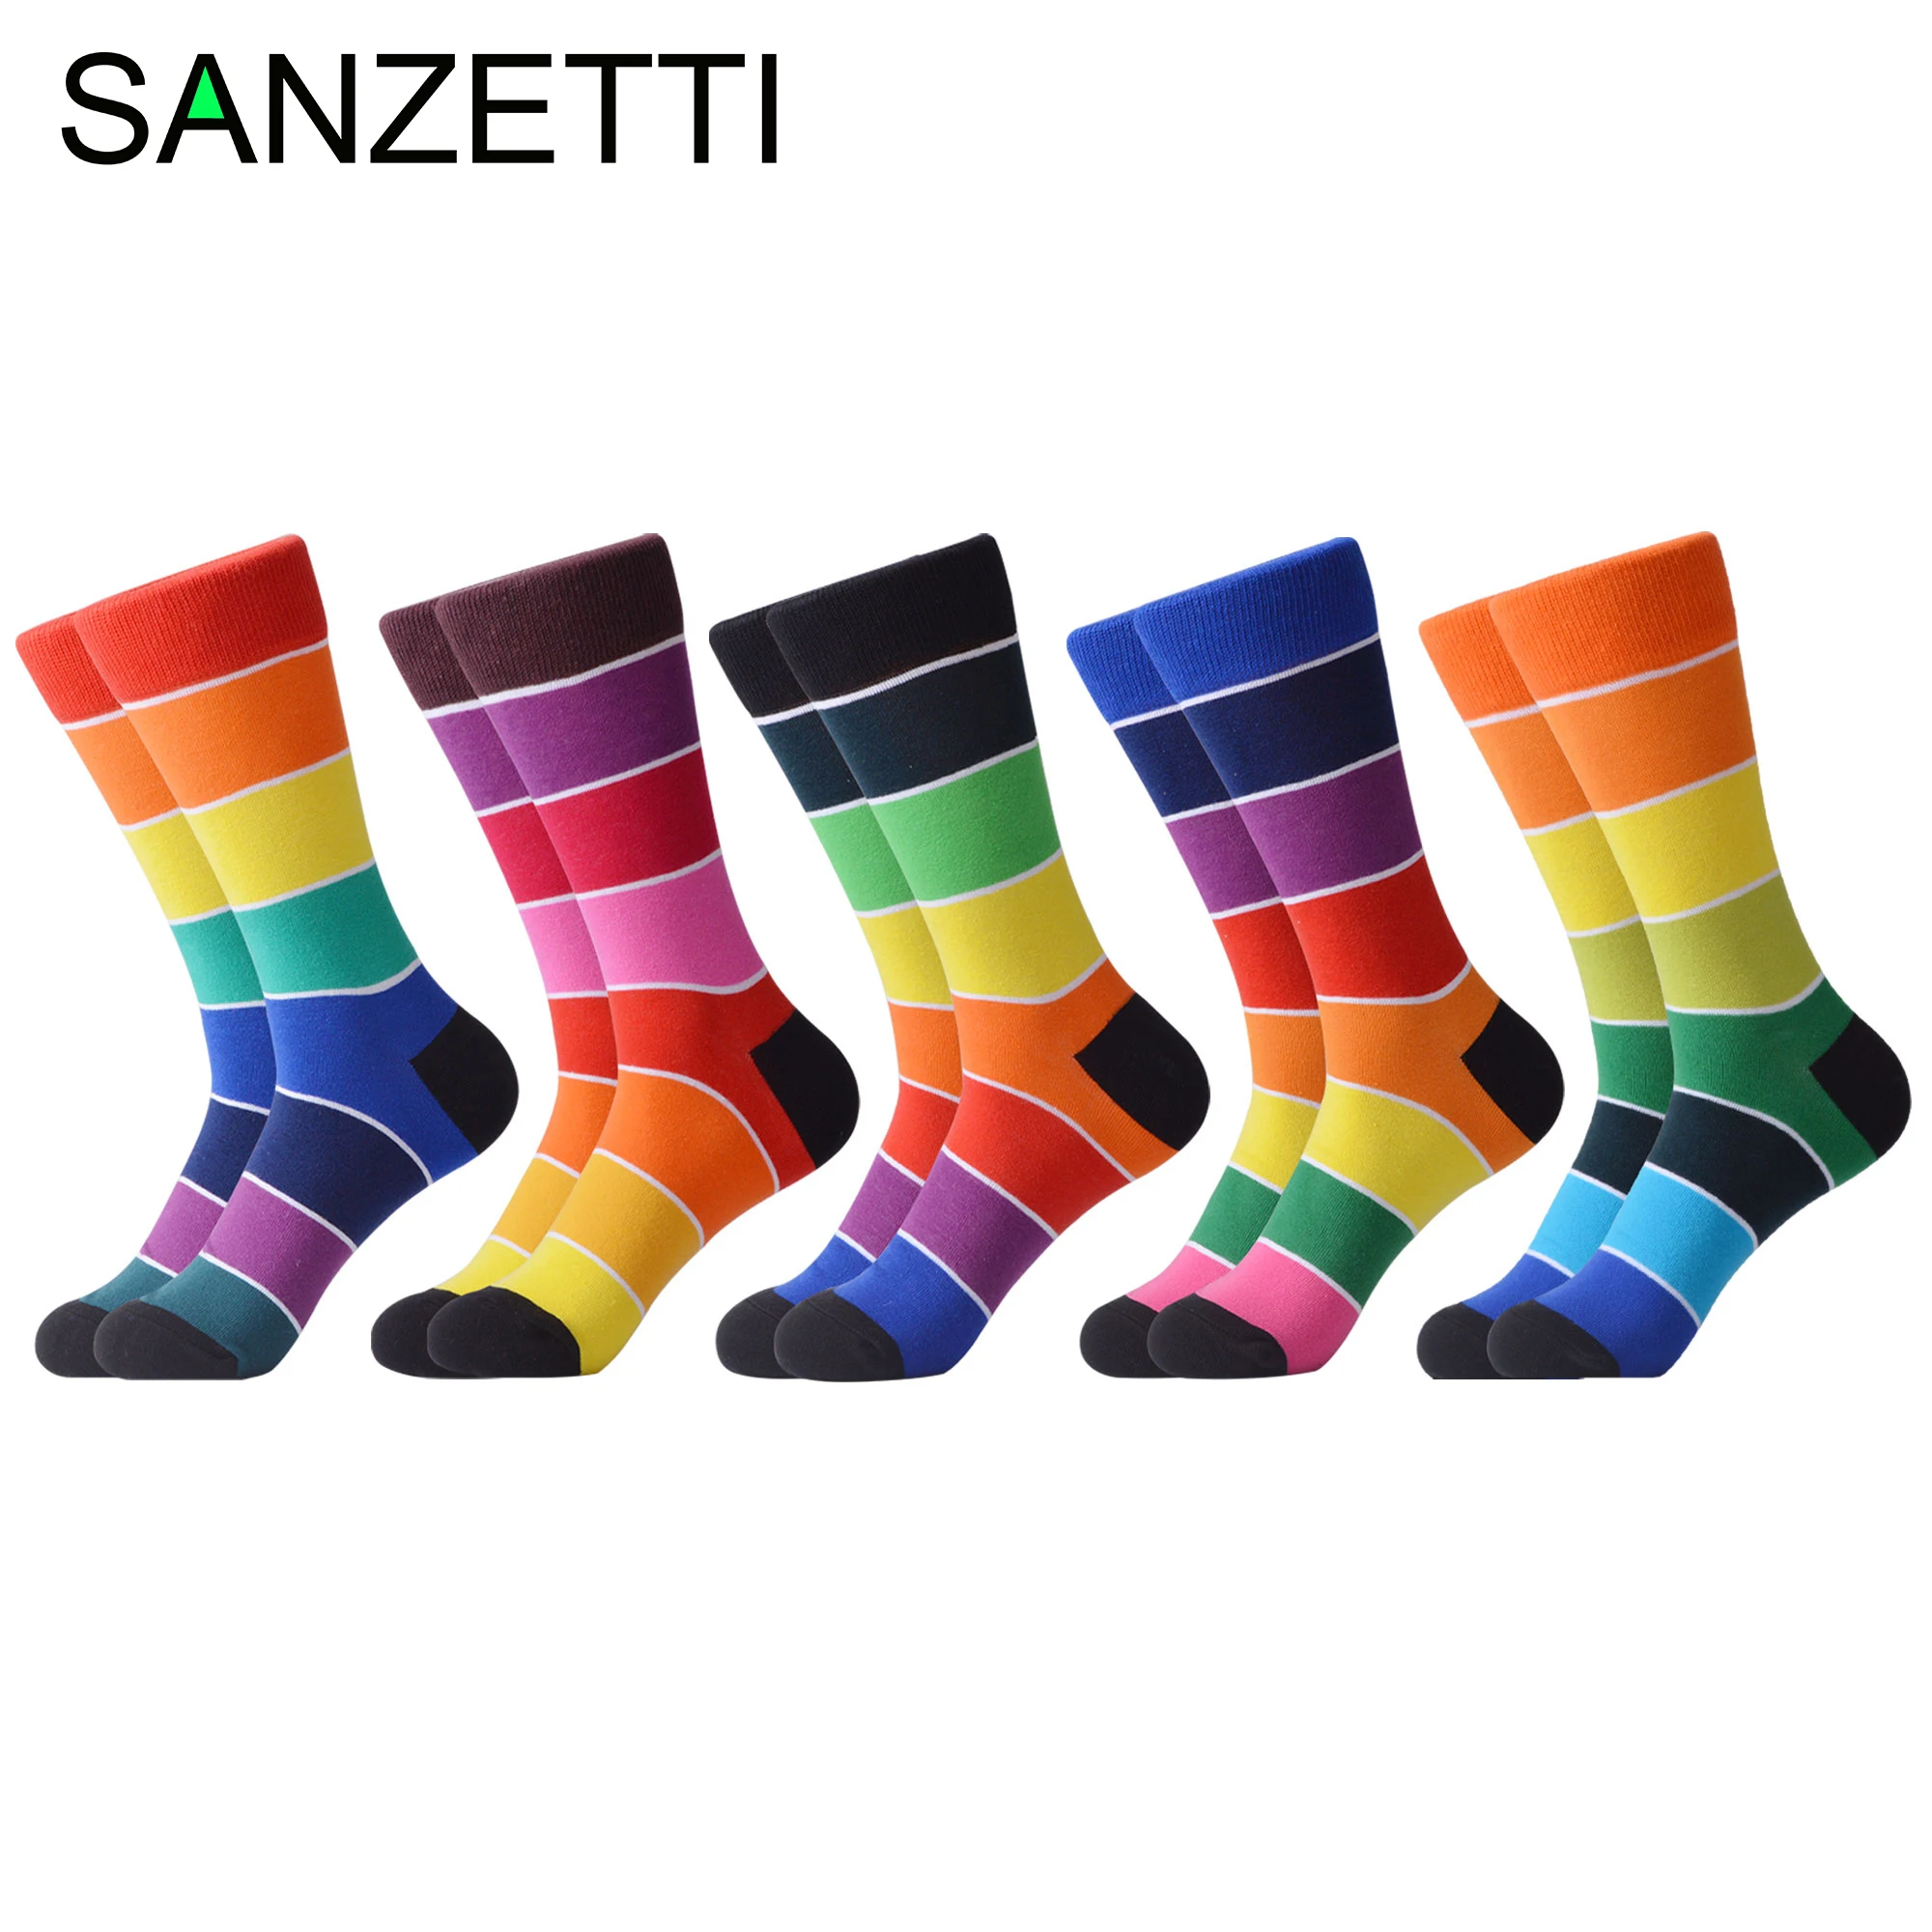 SANZETTI 5 Pairs/Lot New Style Rainbow Socks Men Women Happy Colourful Combed Cotton Crew Socks Party Gifts Creative Dress Socks